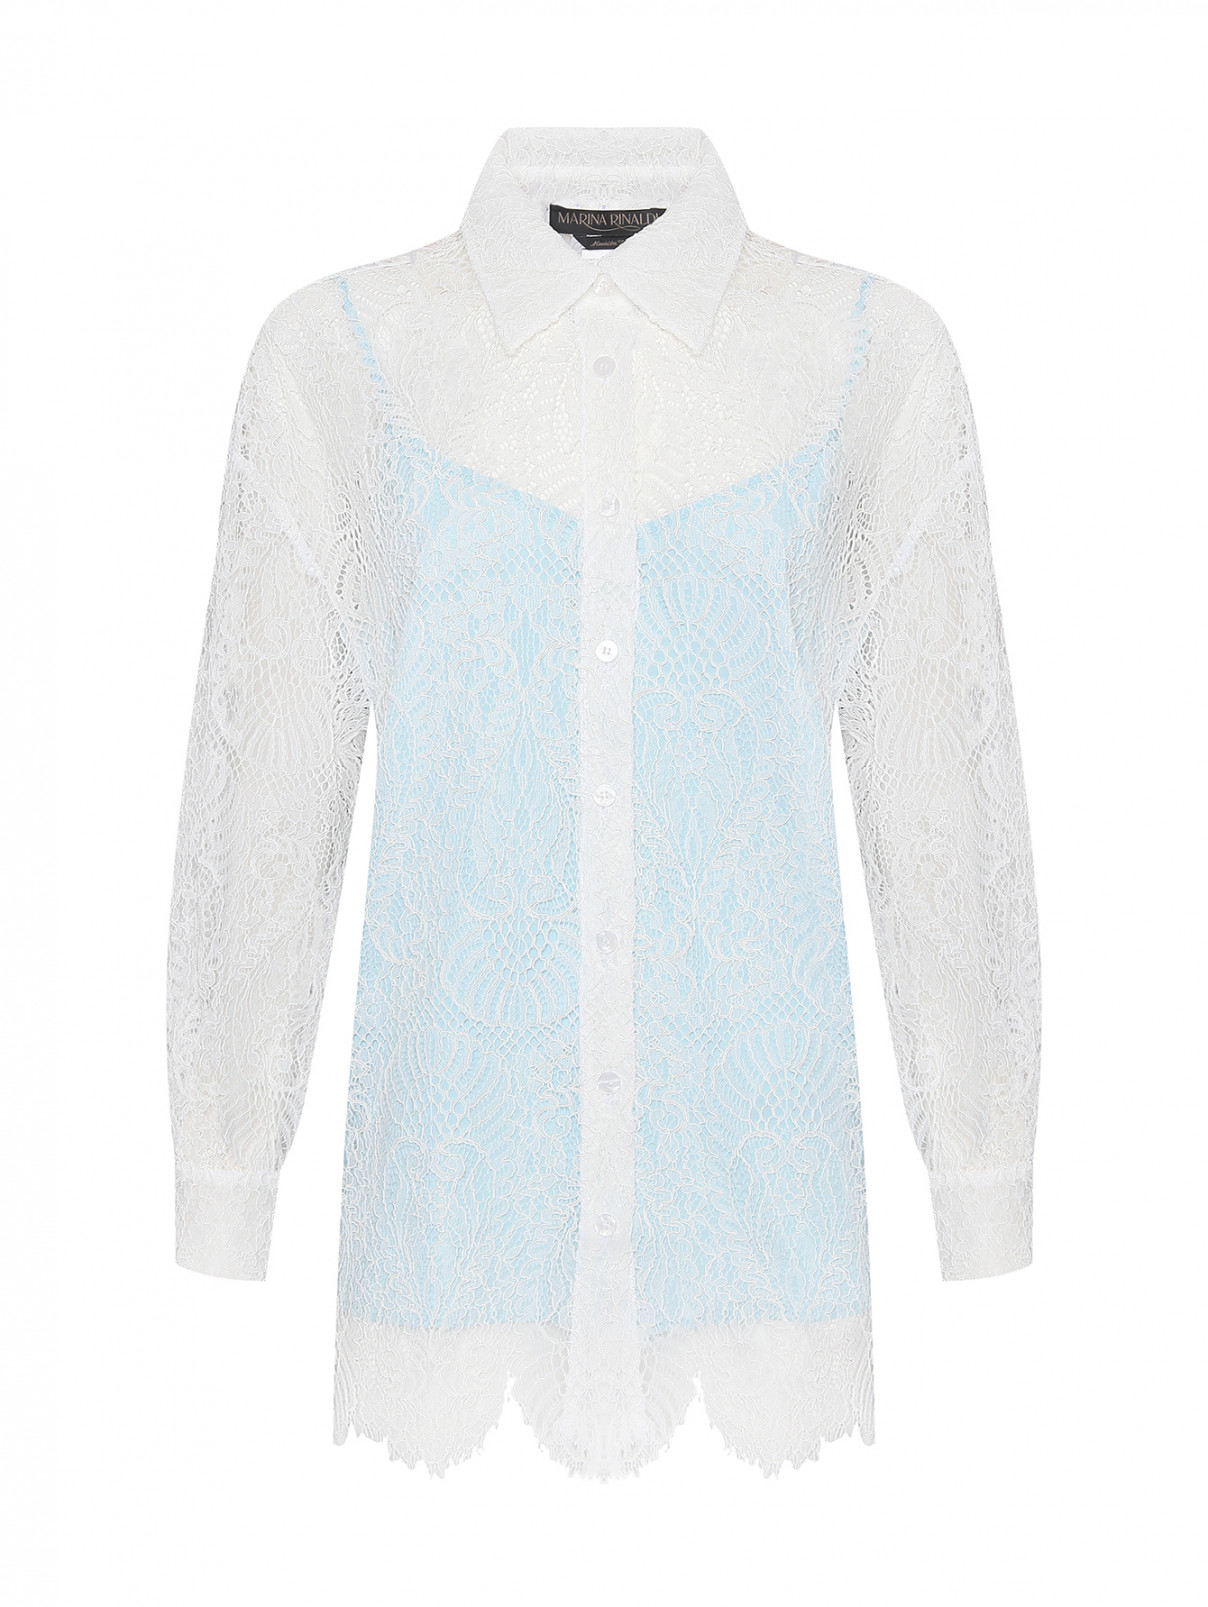 Блуза из кружева Marina Rinaldi  –  Общий вид  – Цвет:  Белый